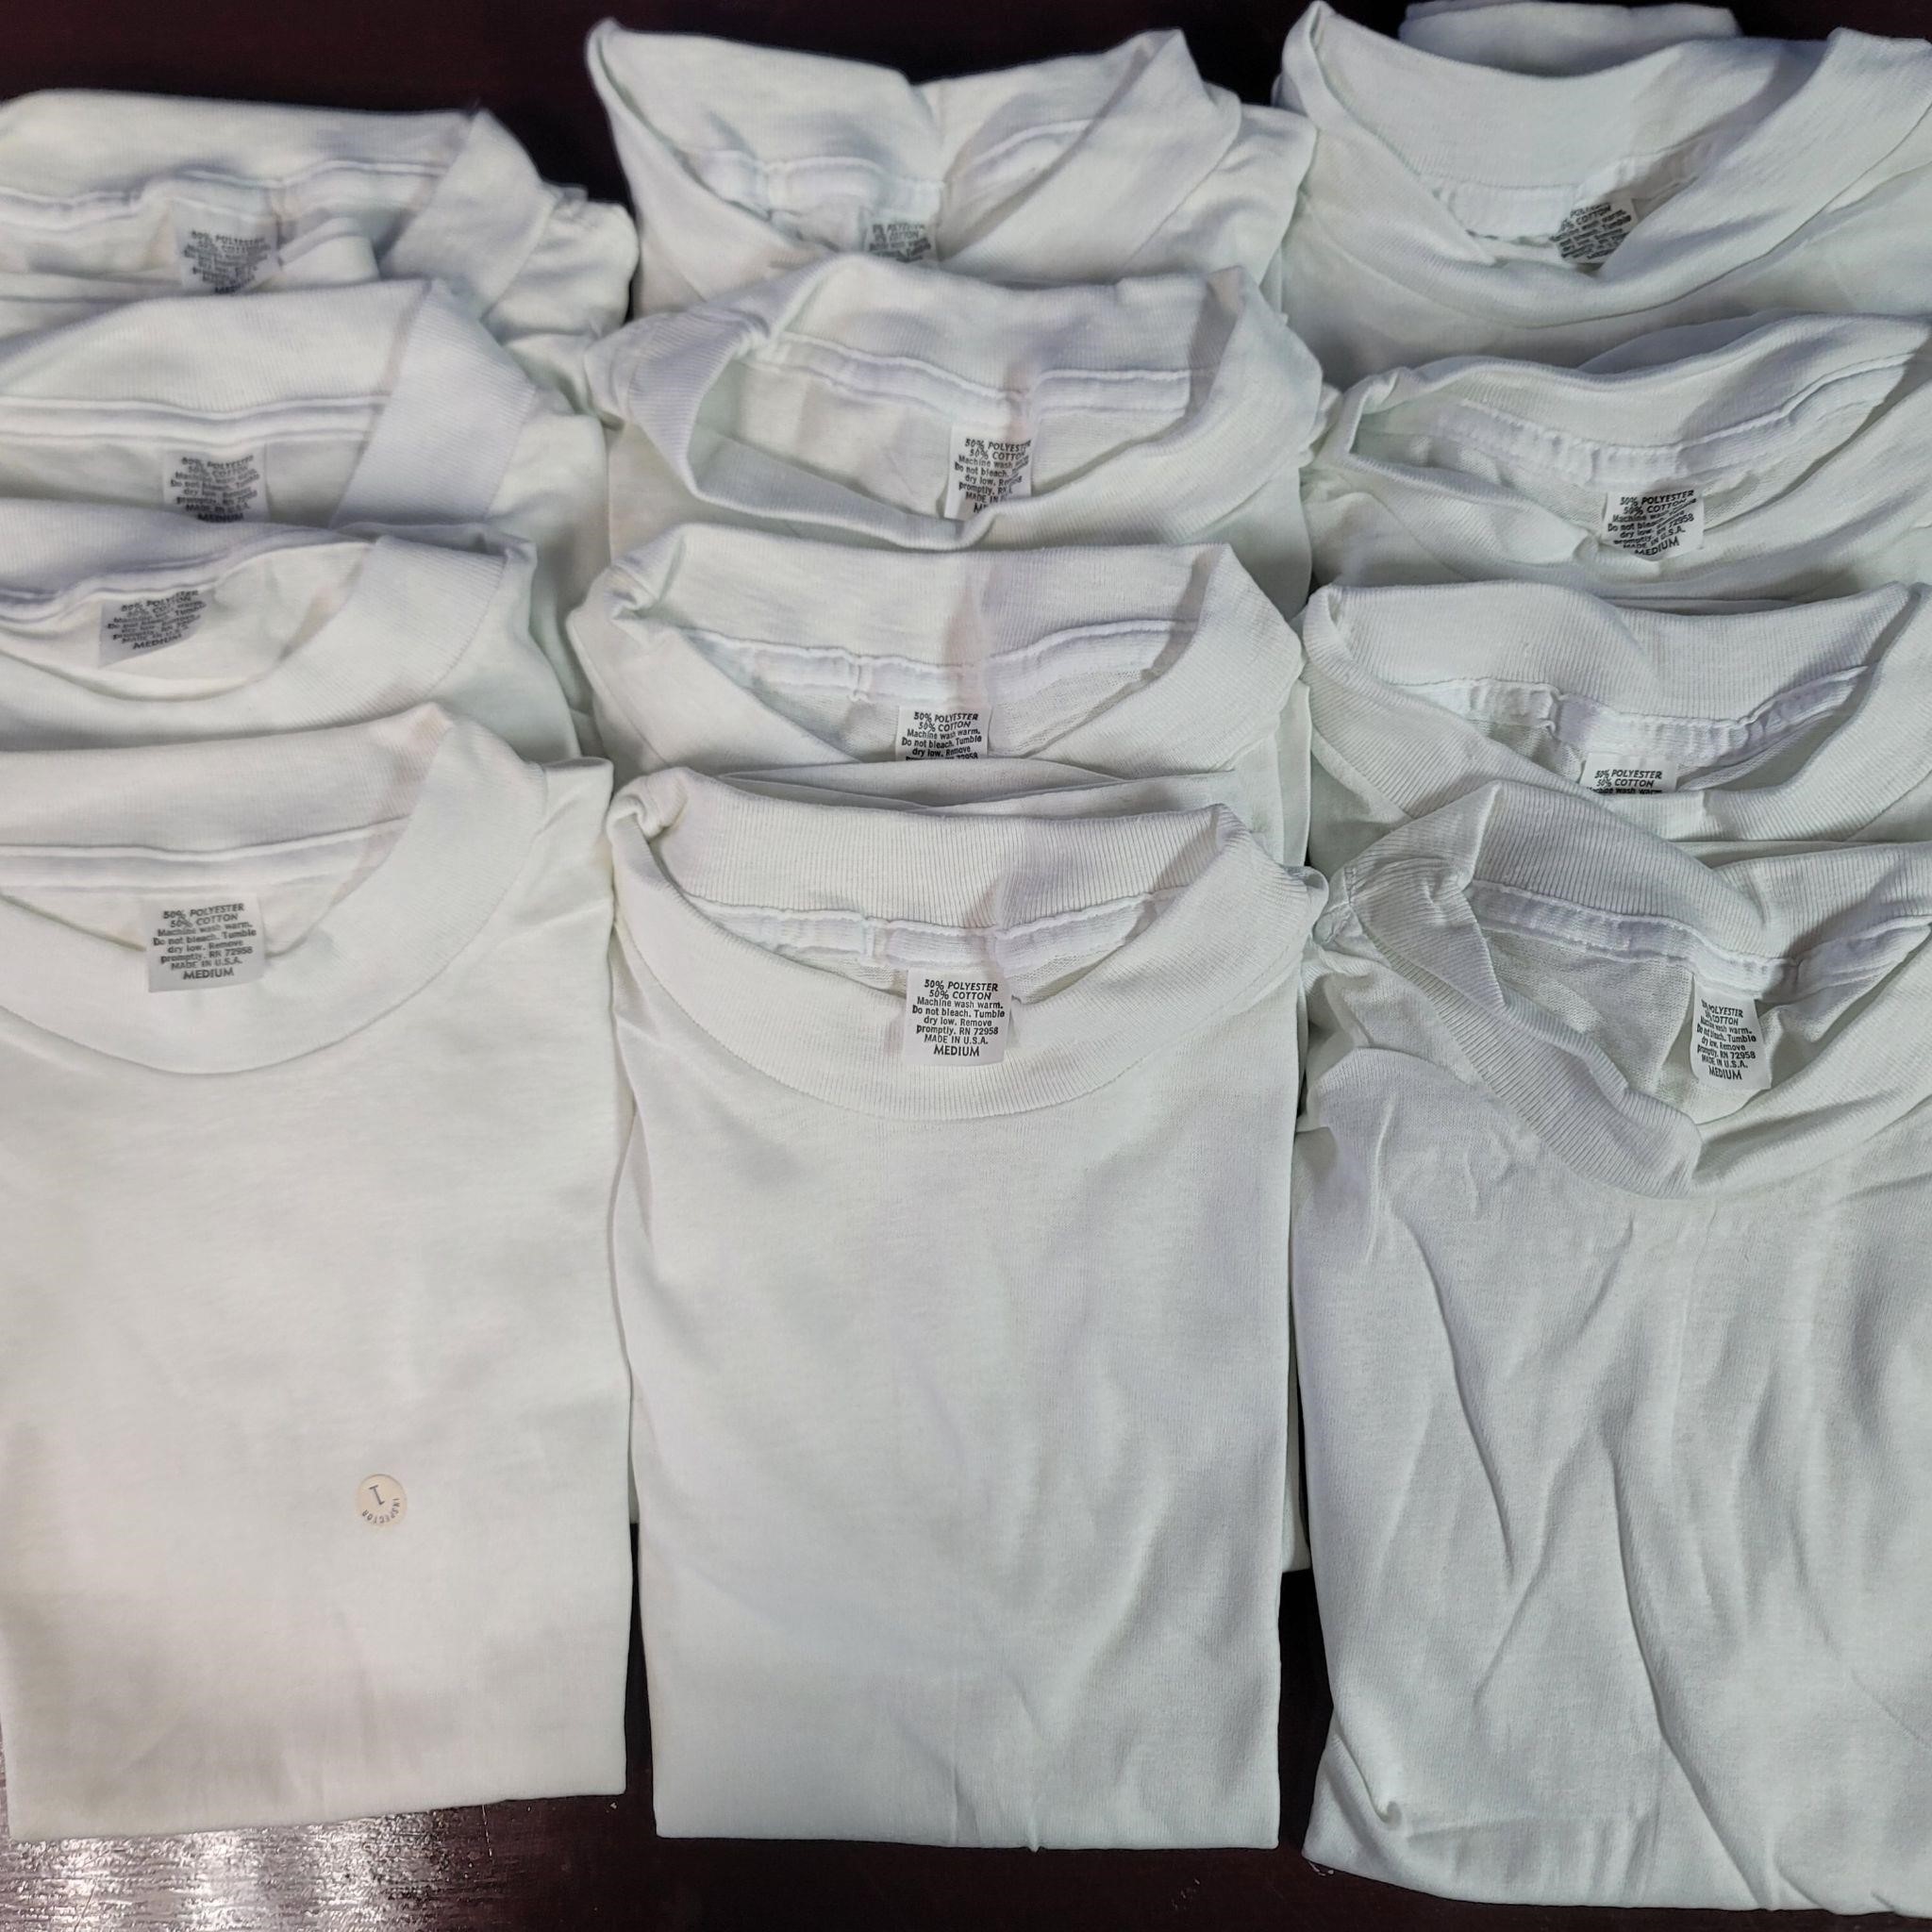 Lot of 12 Children's White T-Shirts Size 10/12